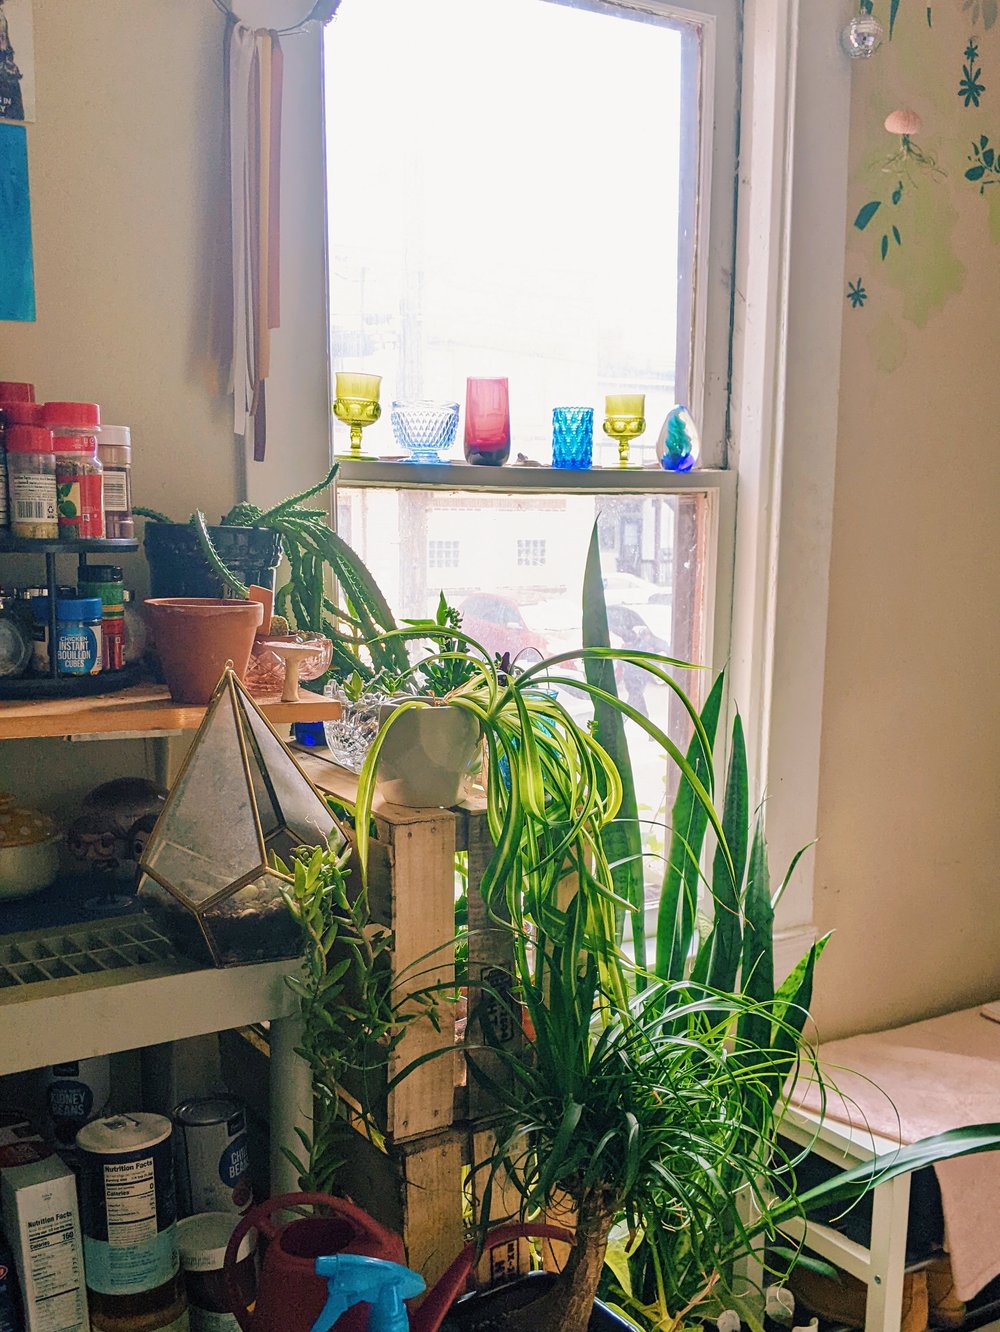 kitchen window angle of plants